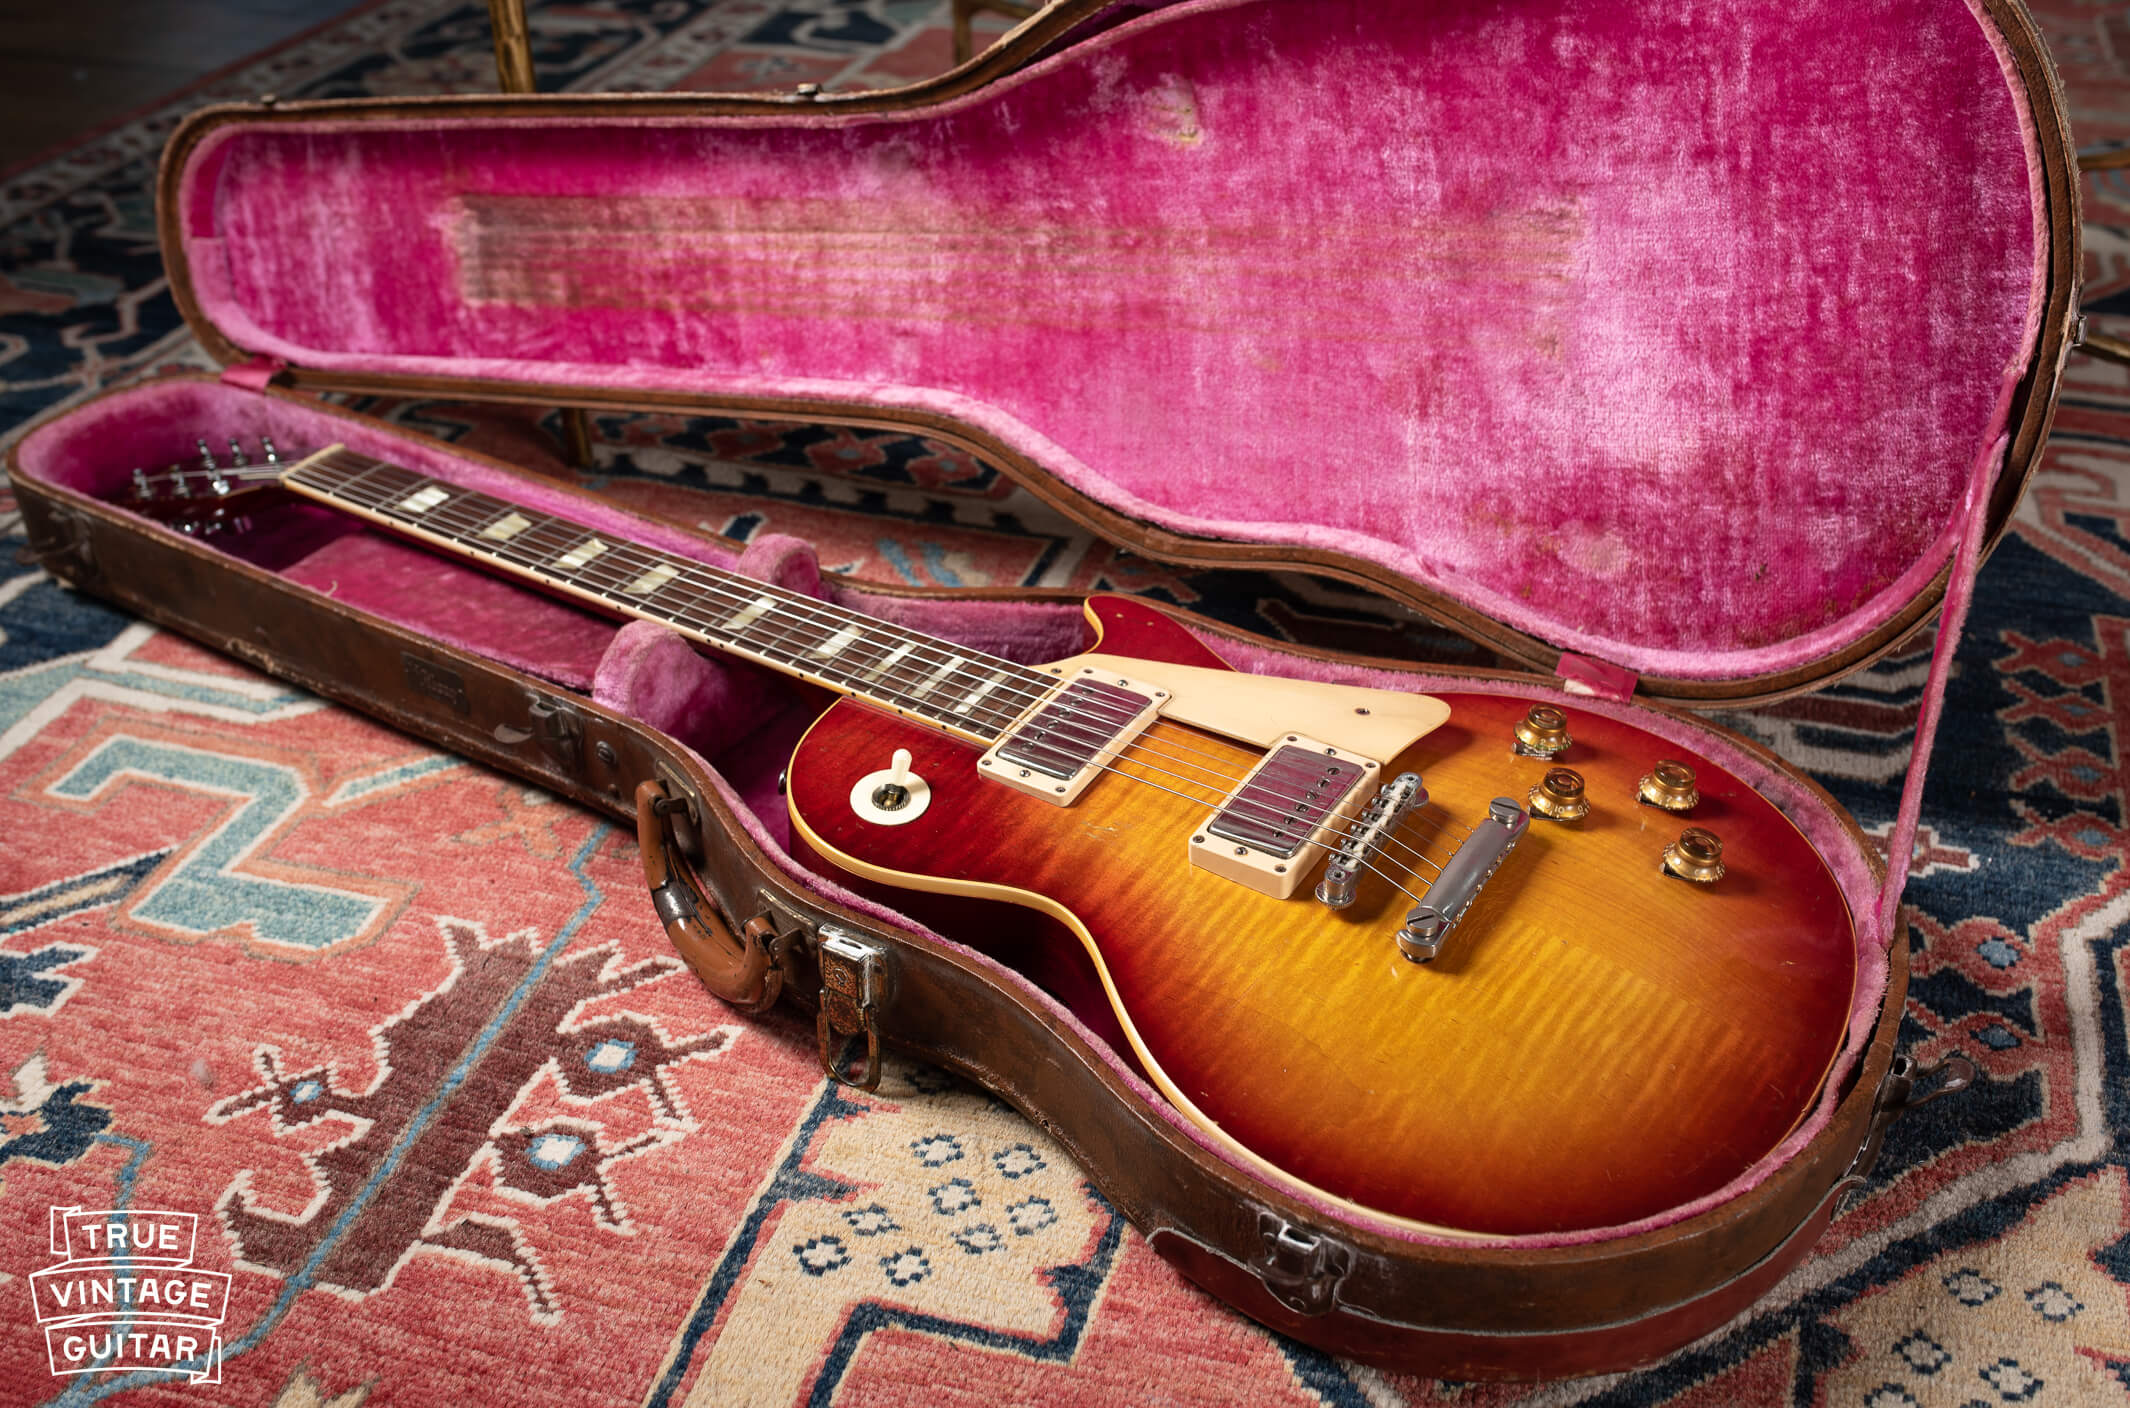 1958 Gibson Les Paul Standard Burst True Vintage Guitar from Norway